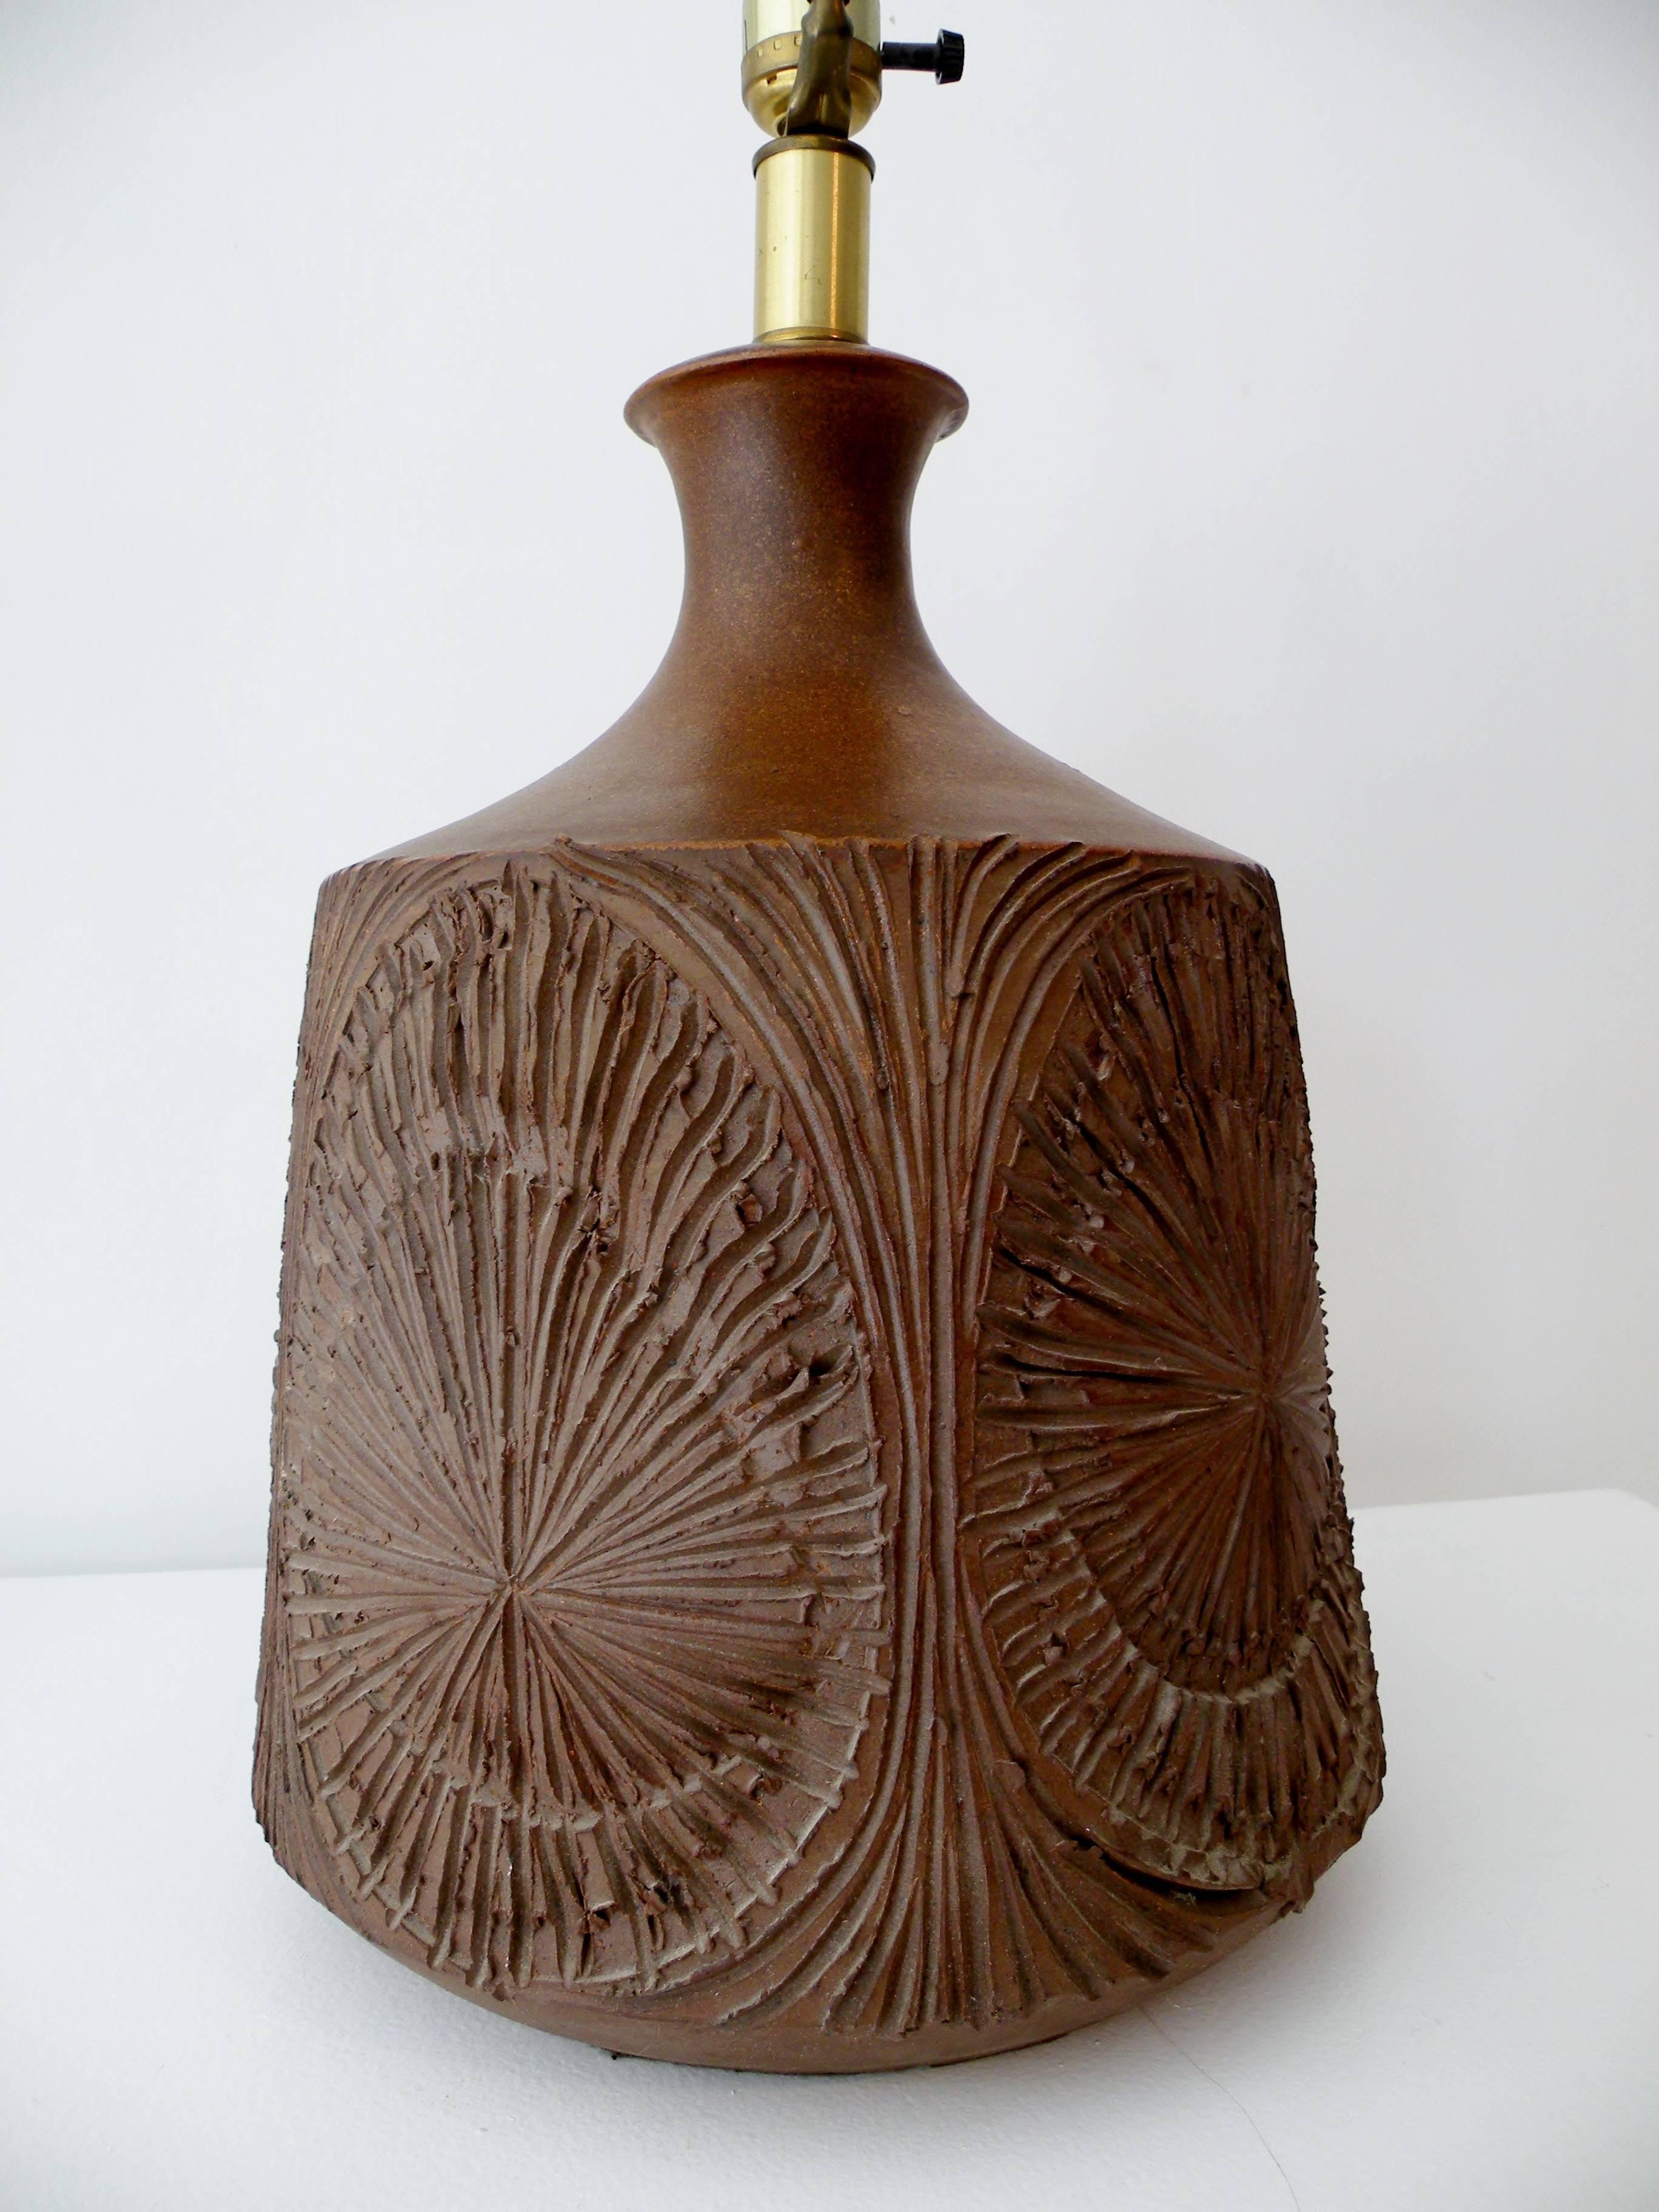 David Cressey Robert Maxwell Earthgender American Craft Pottery Table Lamp 1